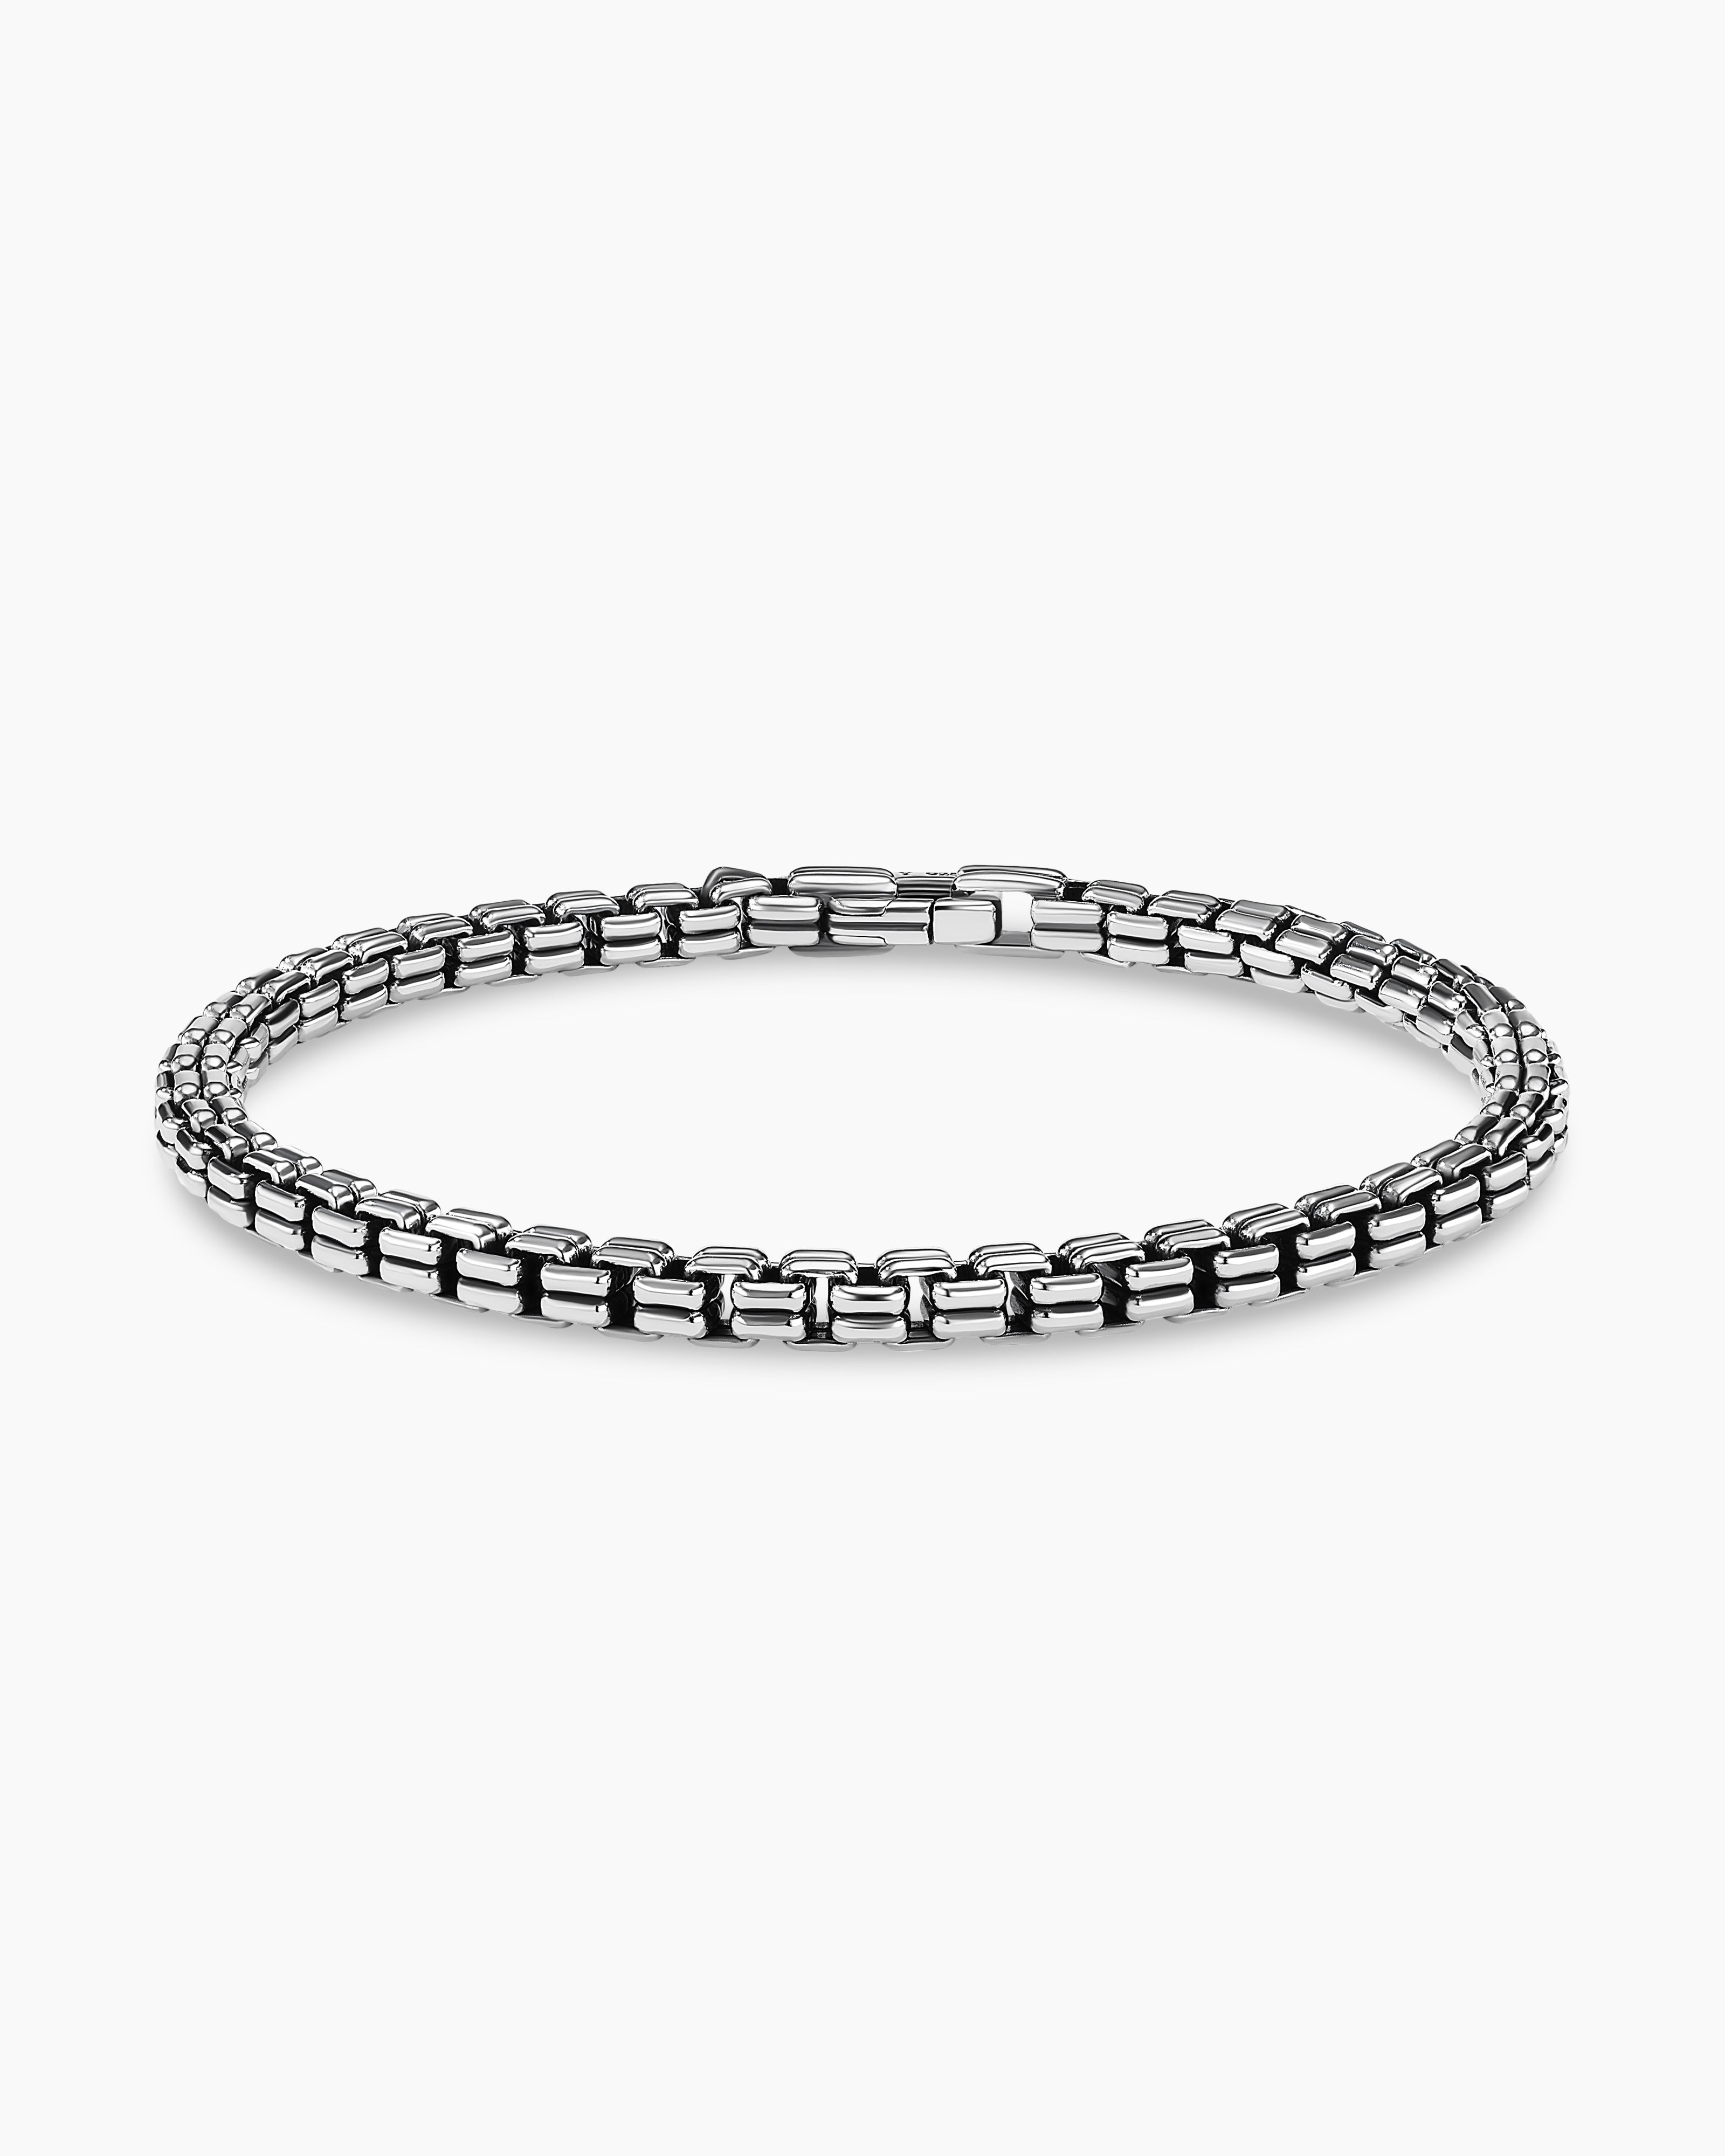 David Yurman Box Chain Sterling Silver Bracelet - Size Medium